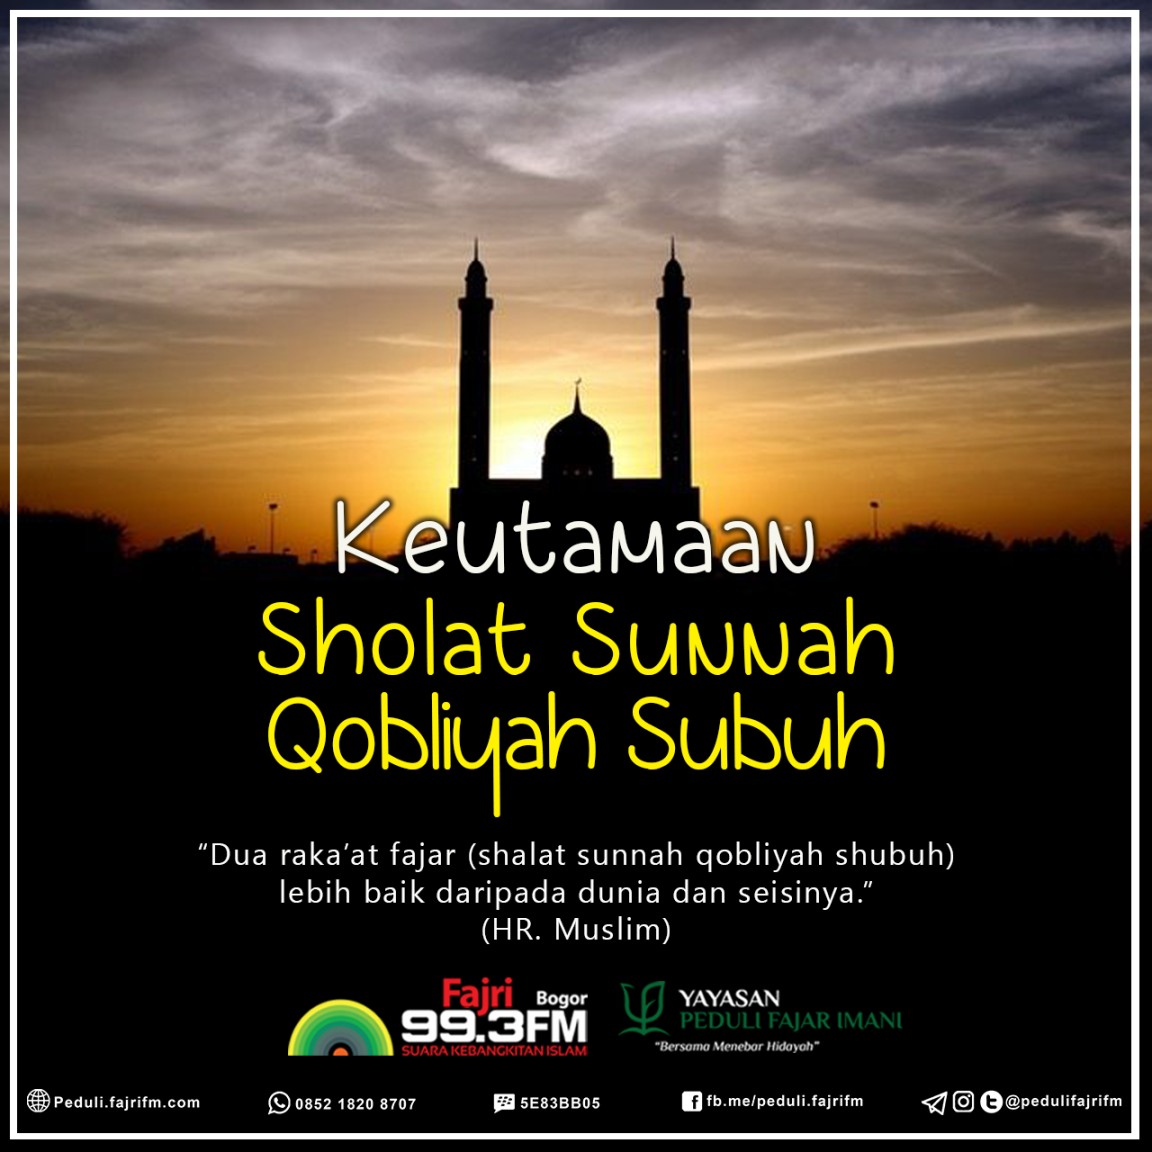 Keutamaan Sholat Sunnah Qobliyah Subuh - Peduli Fajri FM